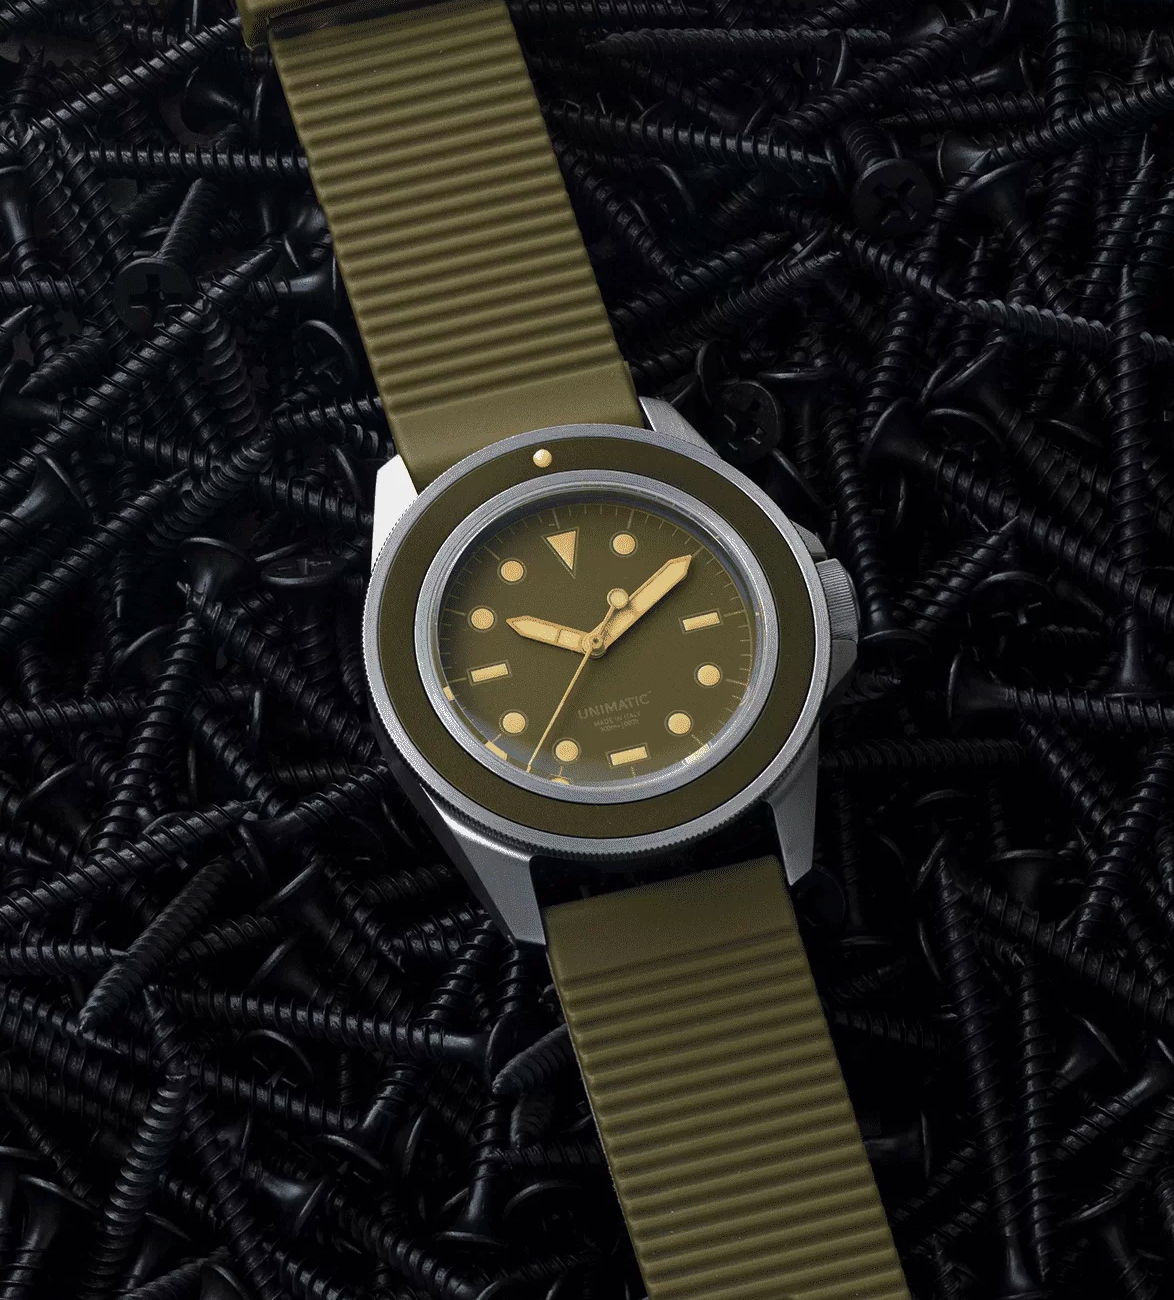 unimatic-series-8-watches-3.jpg | Image